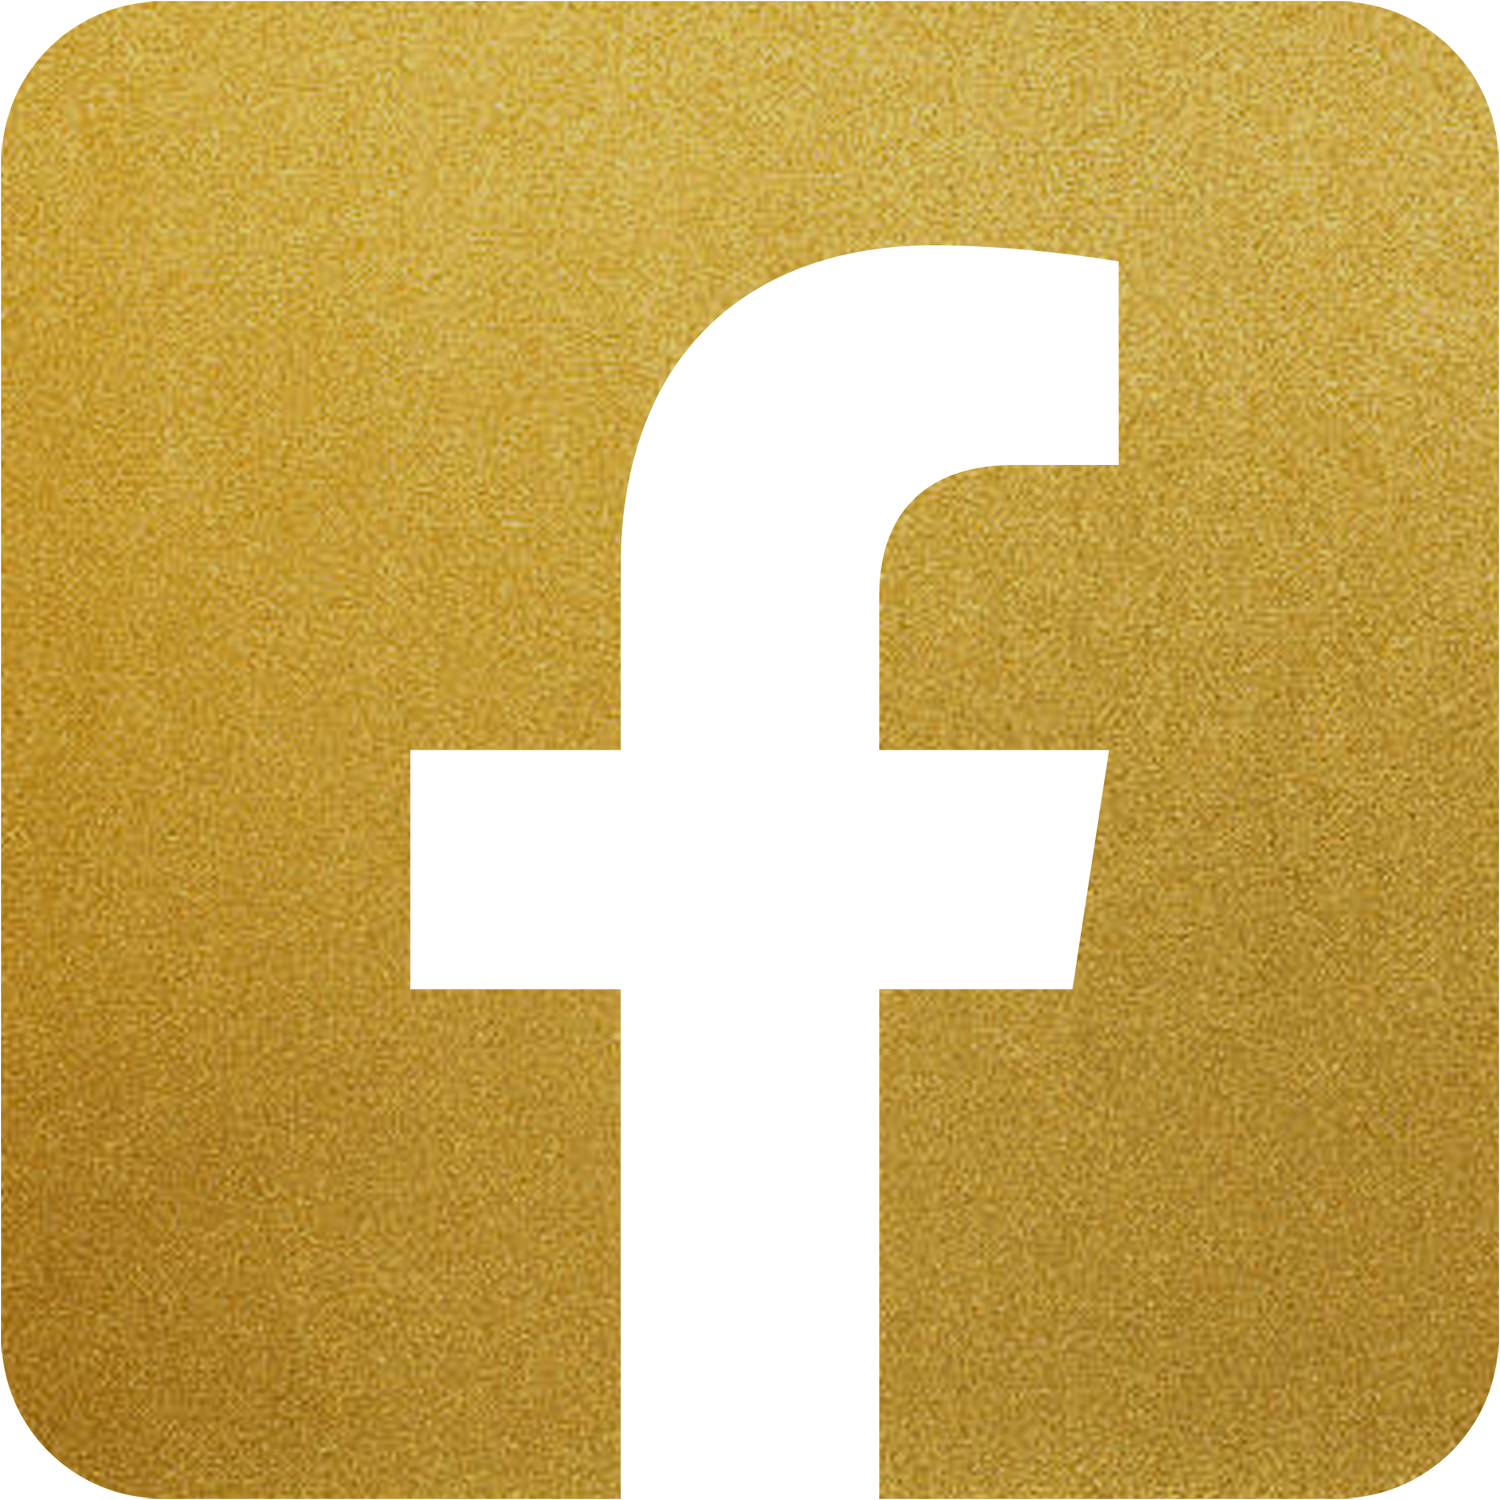 facebook-square-brands-or.png (3.03 MB)